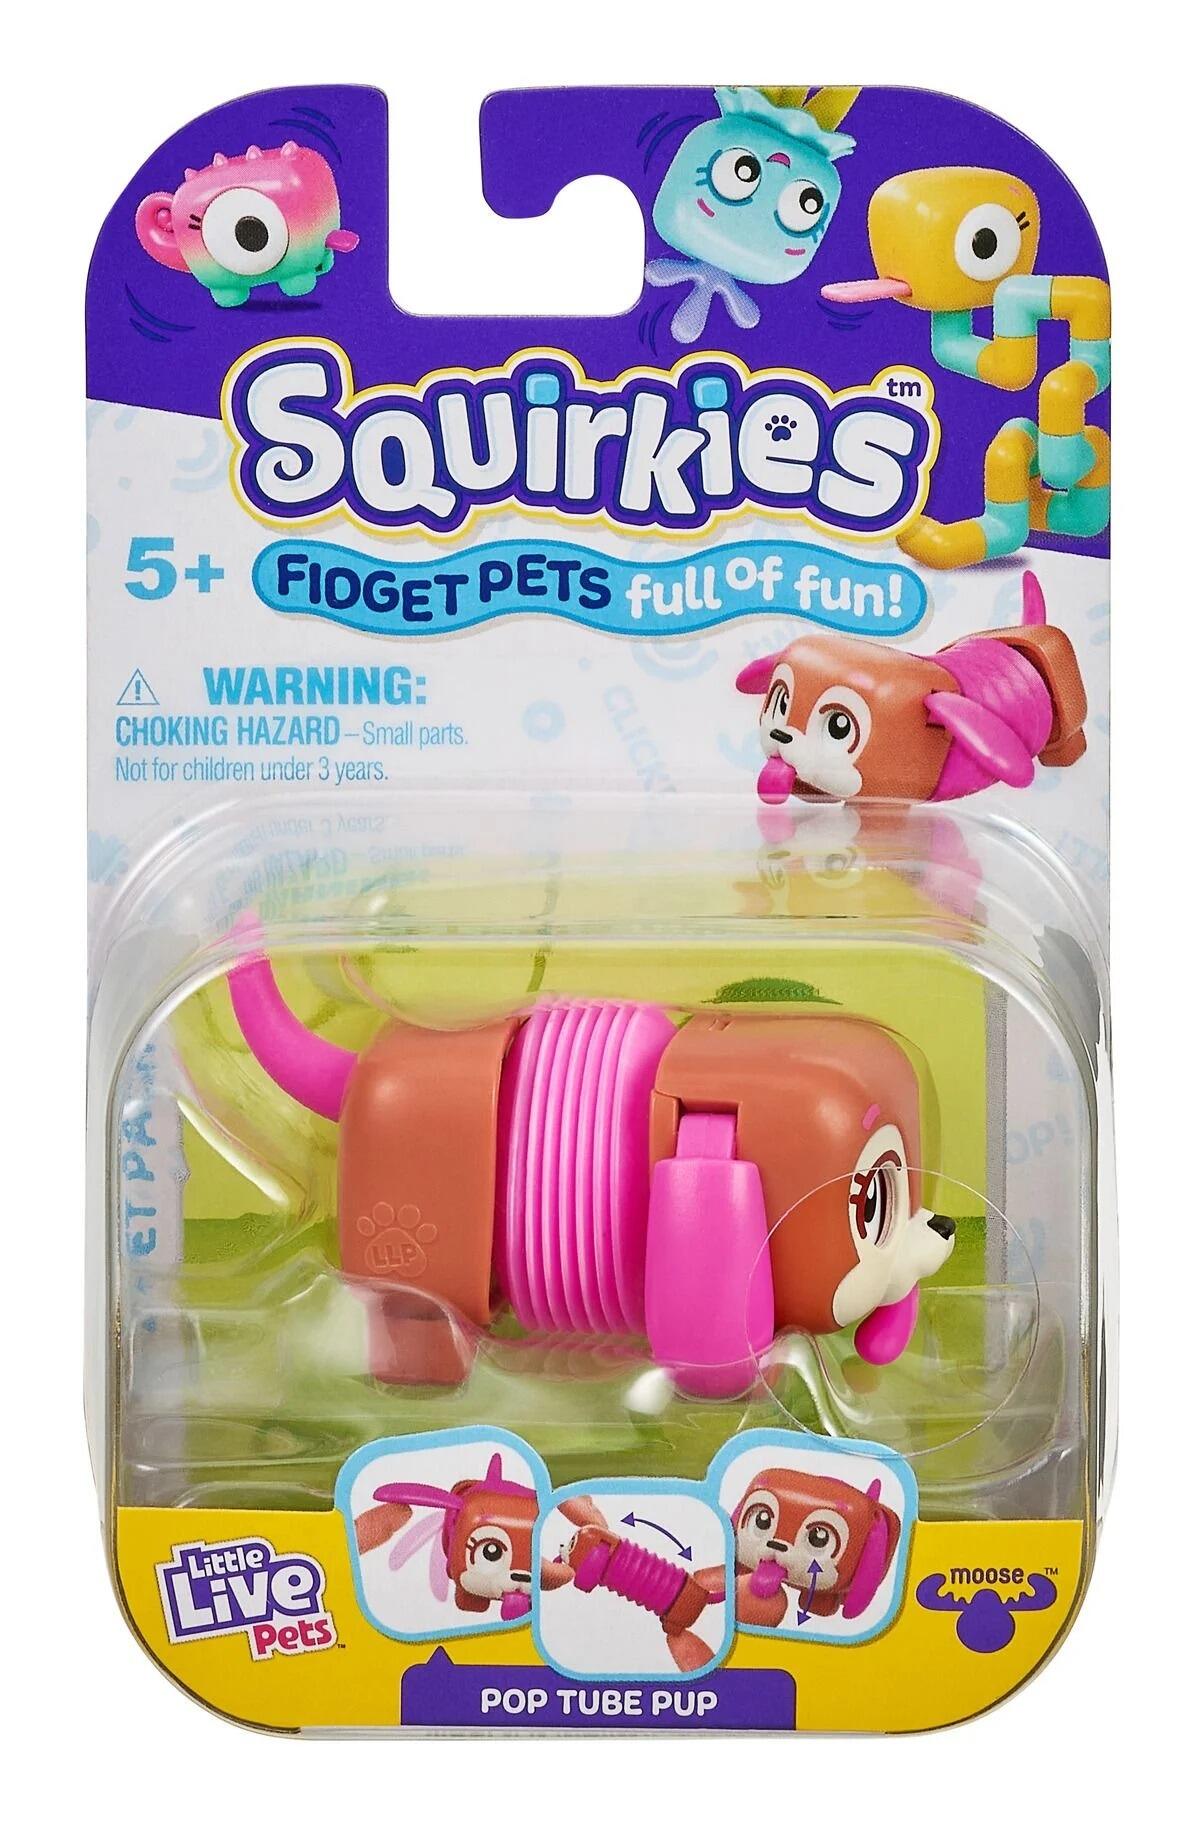 Little Live Pets Squirkies Fidget Pets - Assorted - Chosen at random